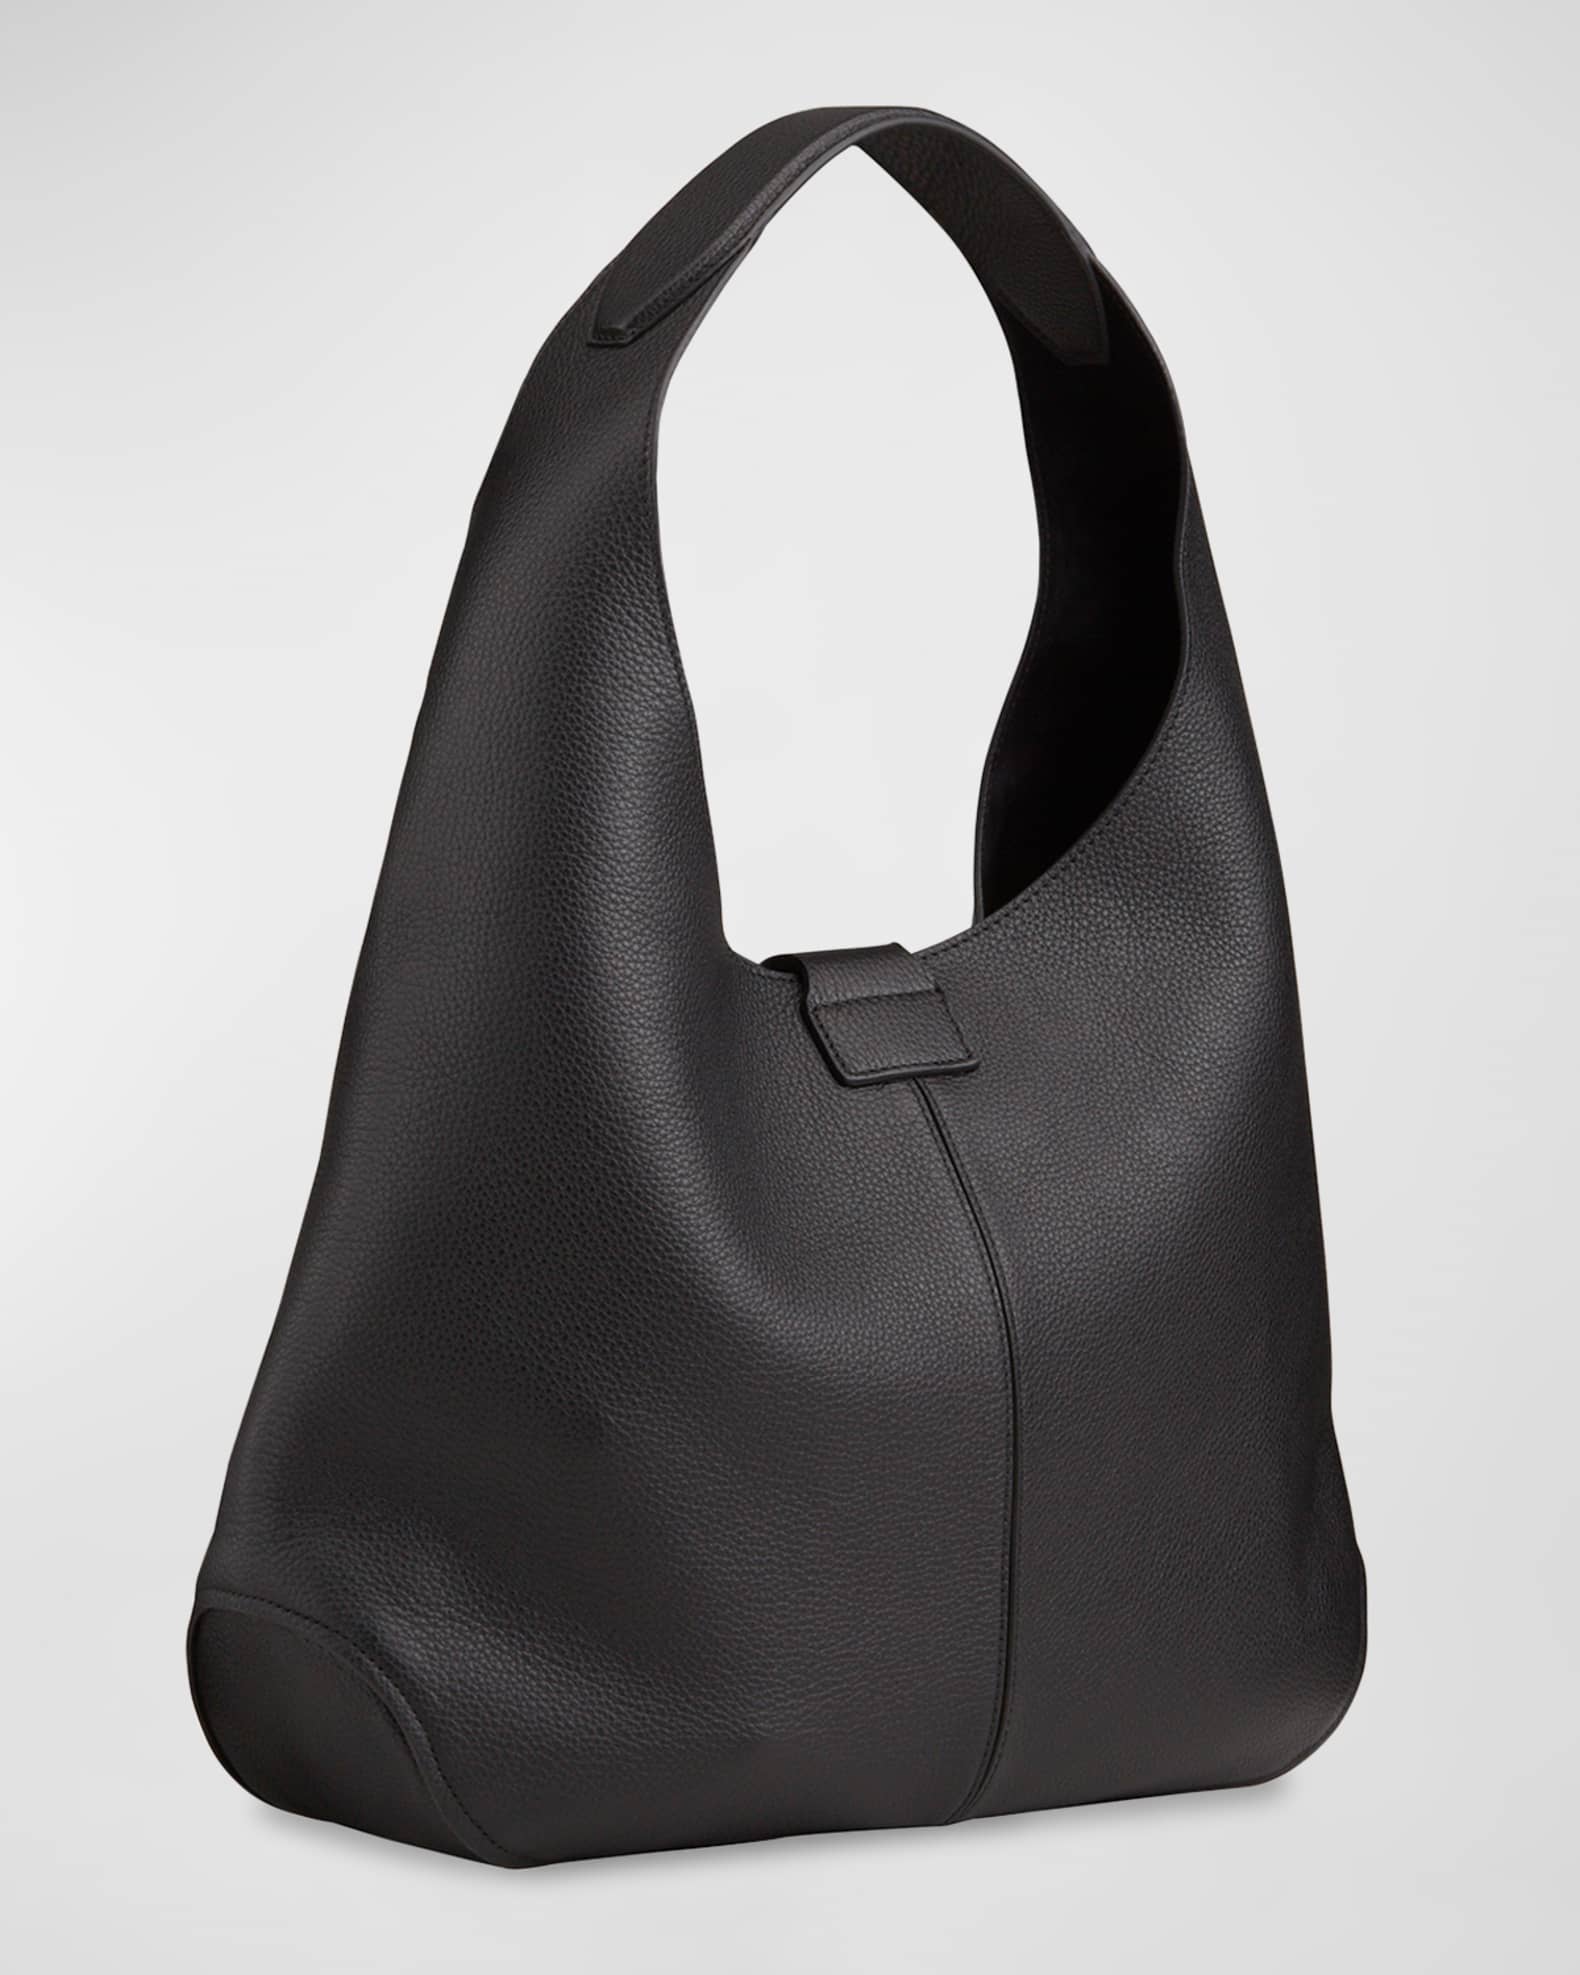 Ferragamo Margot Gancio Pebbled Leather Hobo Bag | Neiman Marcus